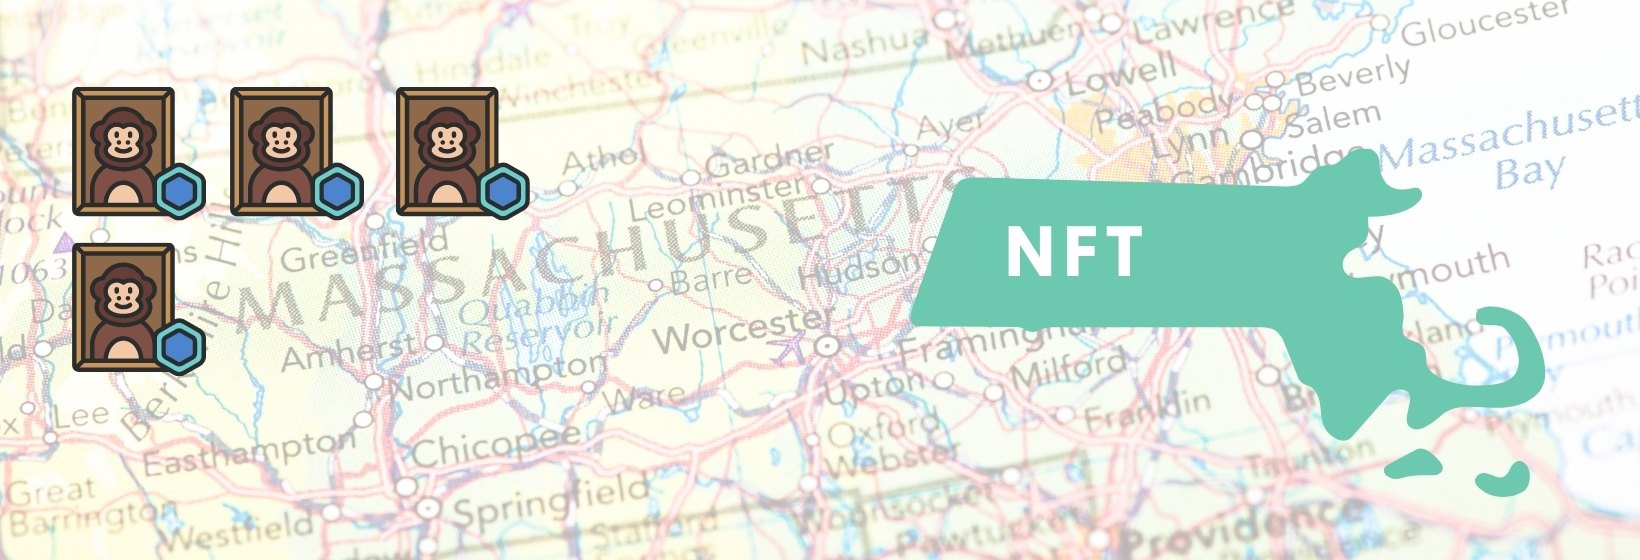 NFT Experiences in Massachusetts